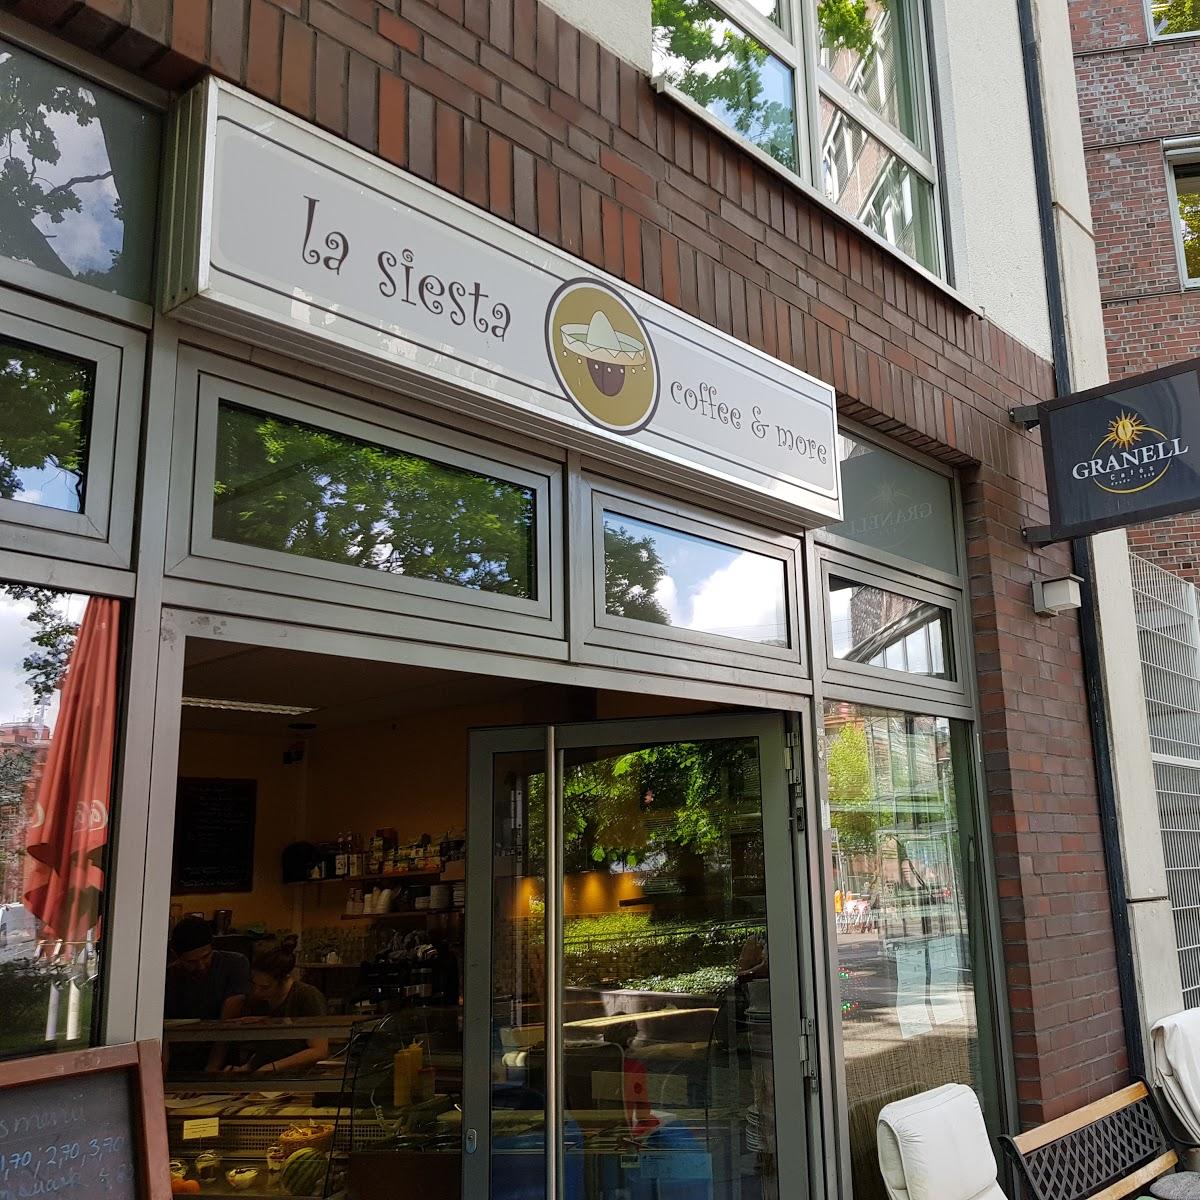 Restaurant "La Siesta Coffee & More" in Berlin